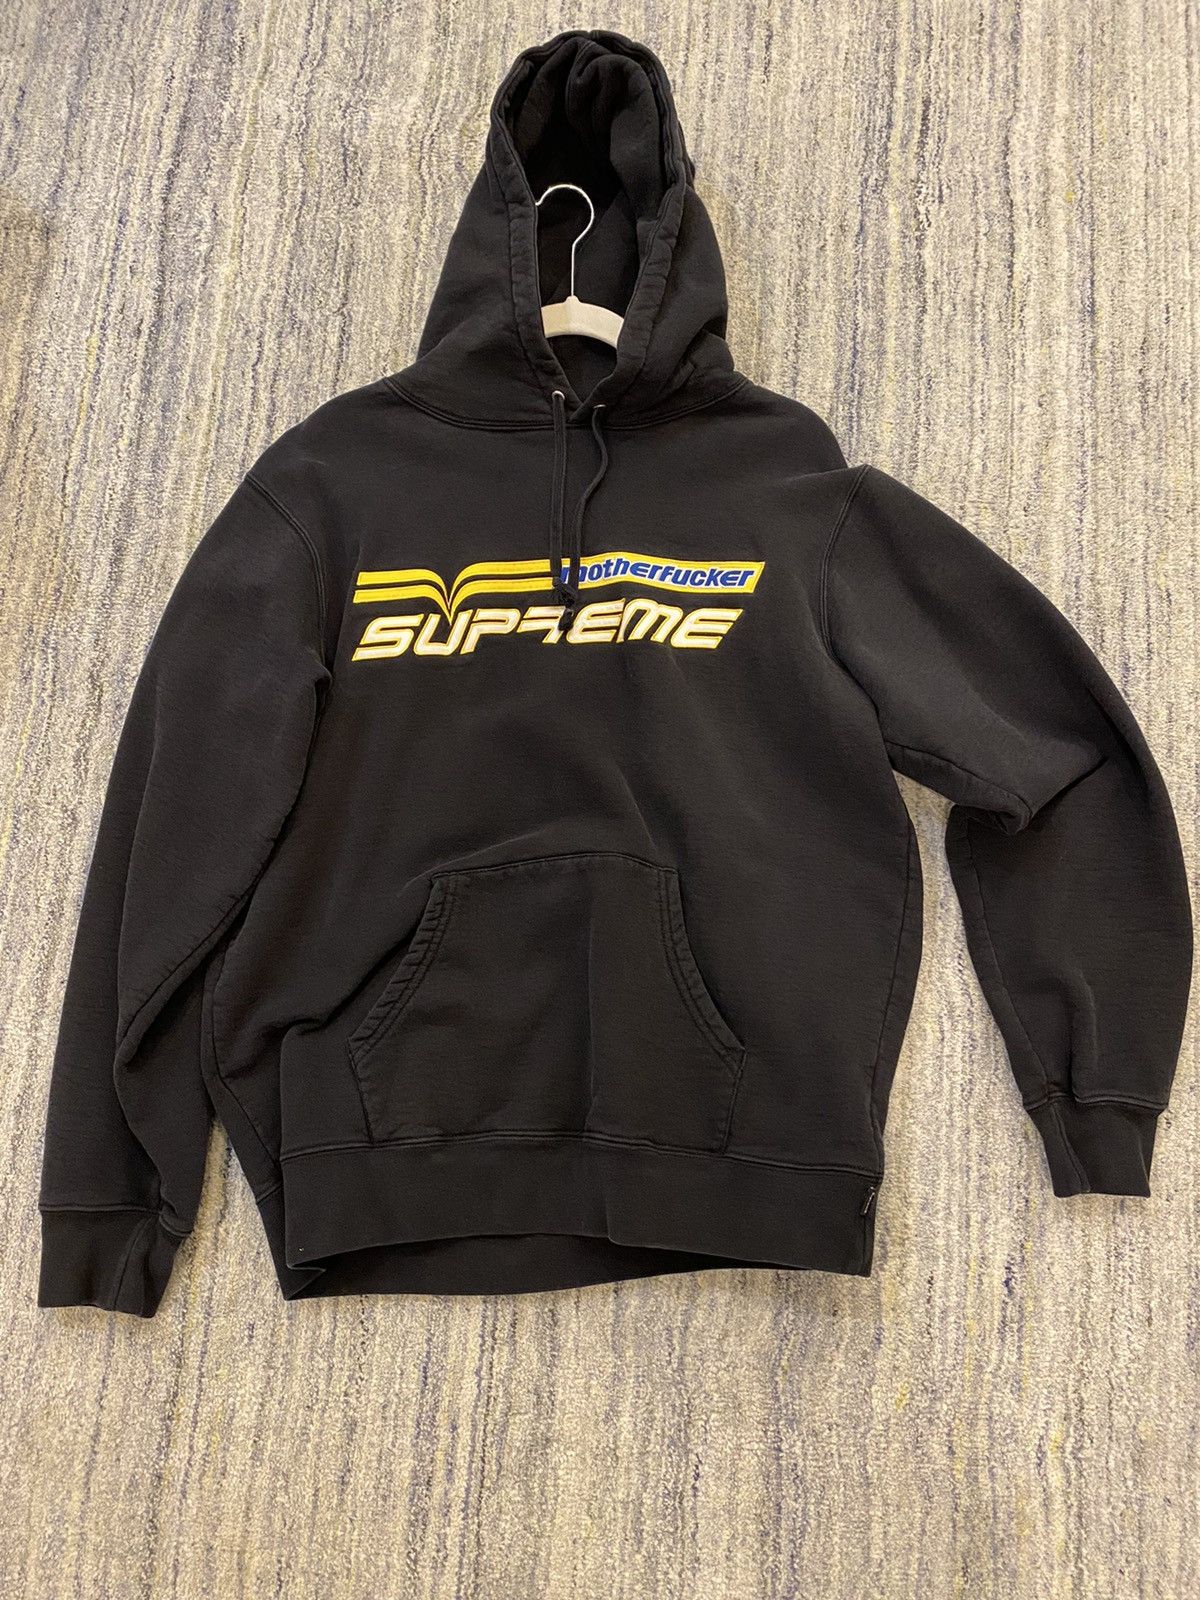 Supreme “Motherfucker Supreme” hoodie | Grailed